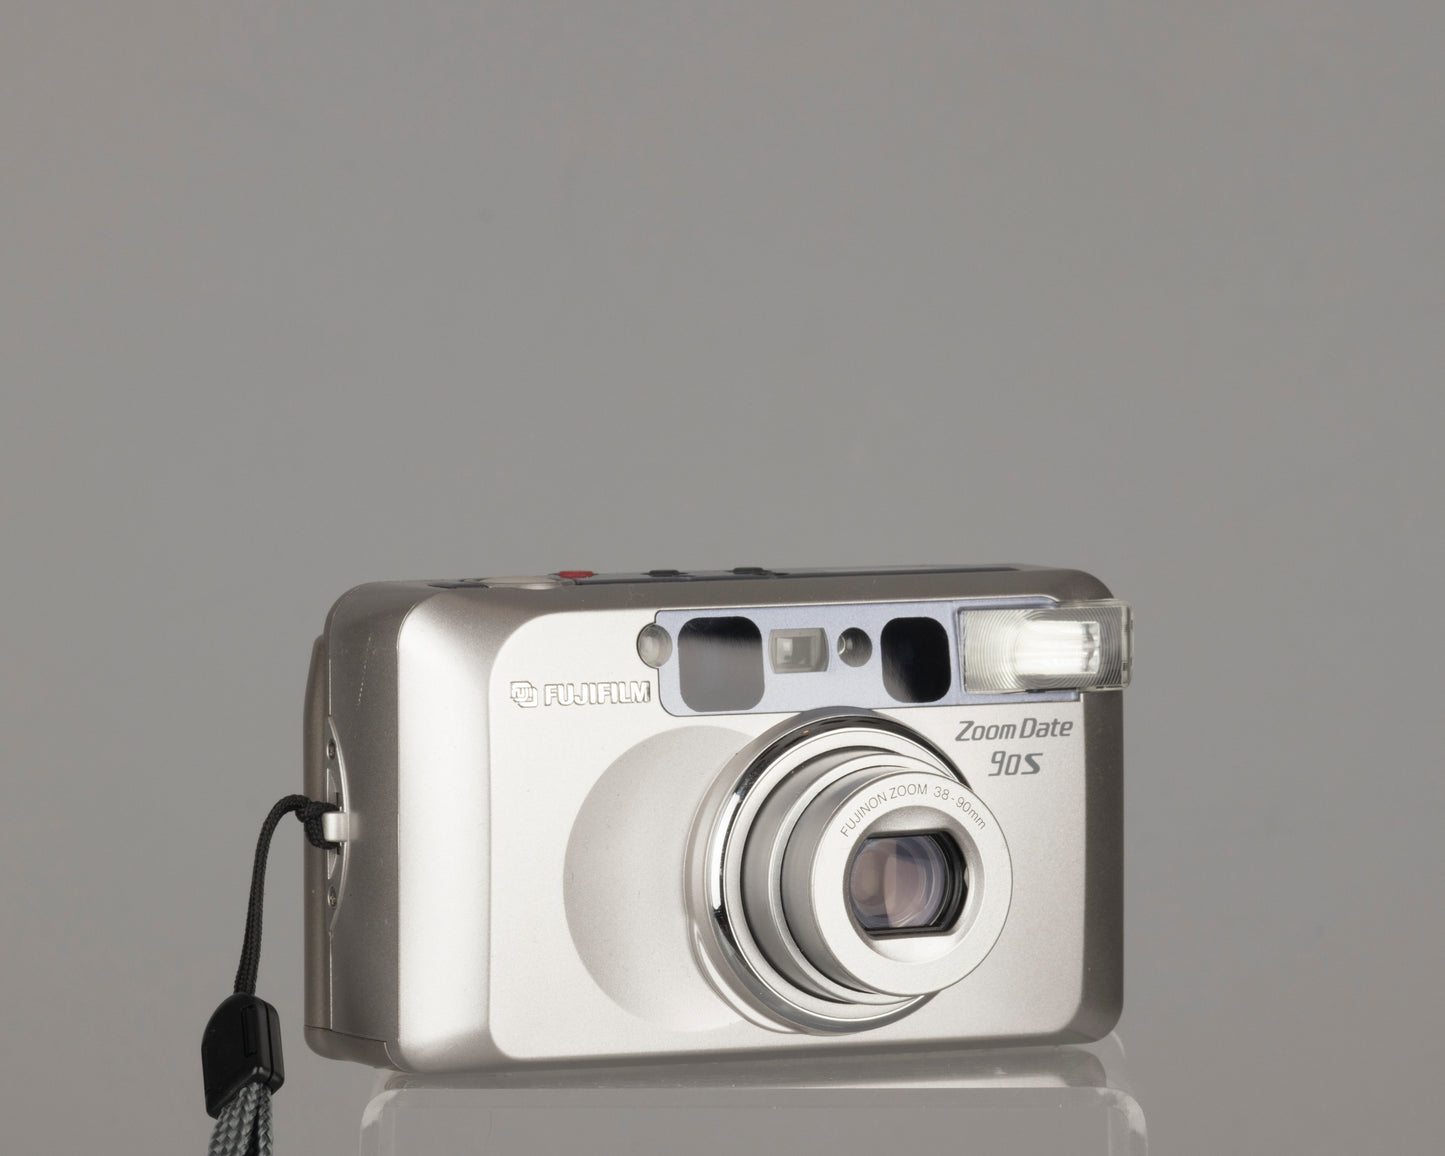 The Fujifilm Zoom Date 90S 35mm film camera